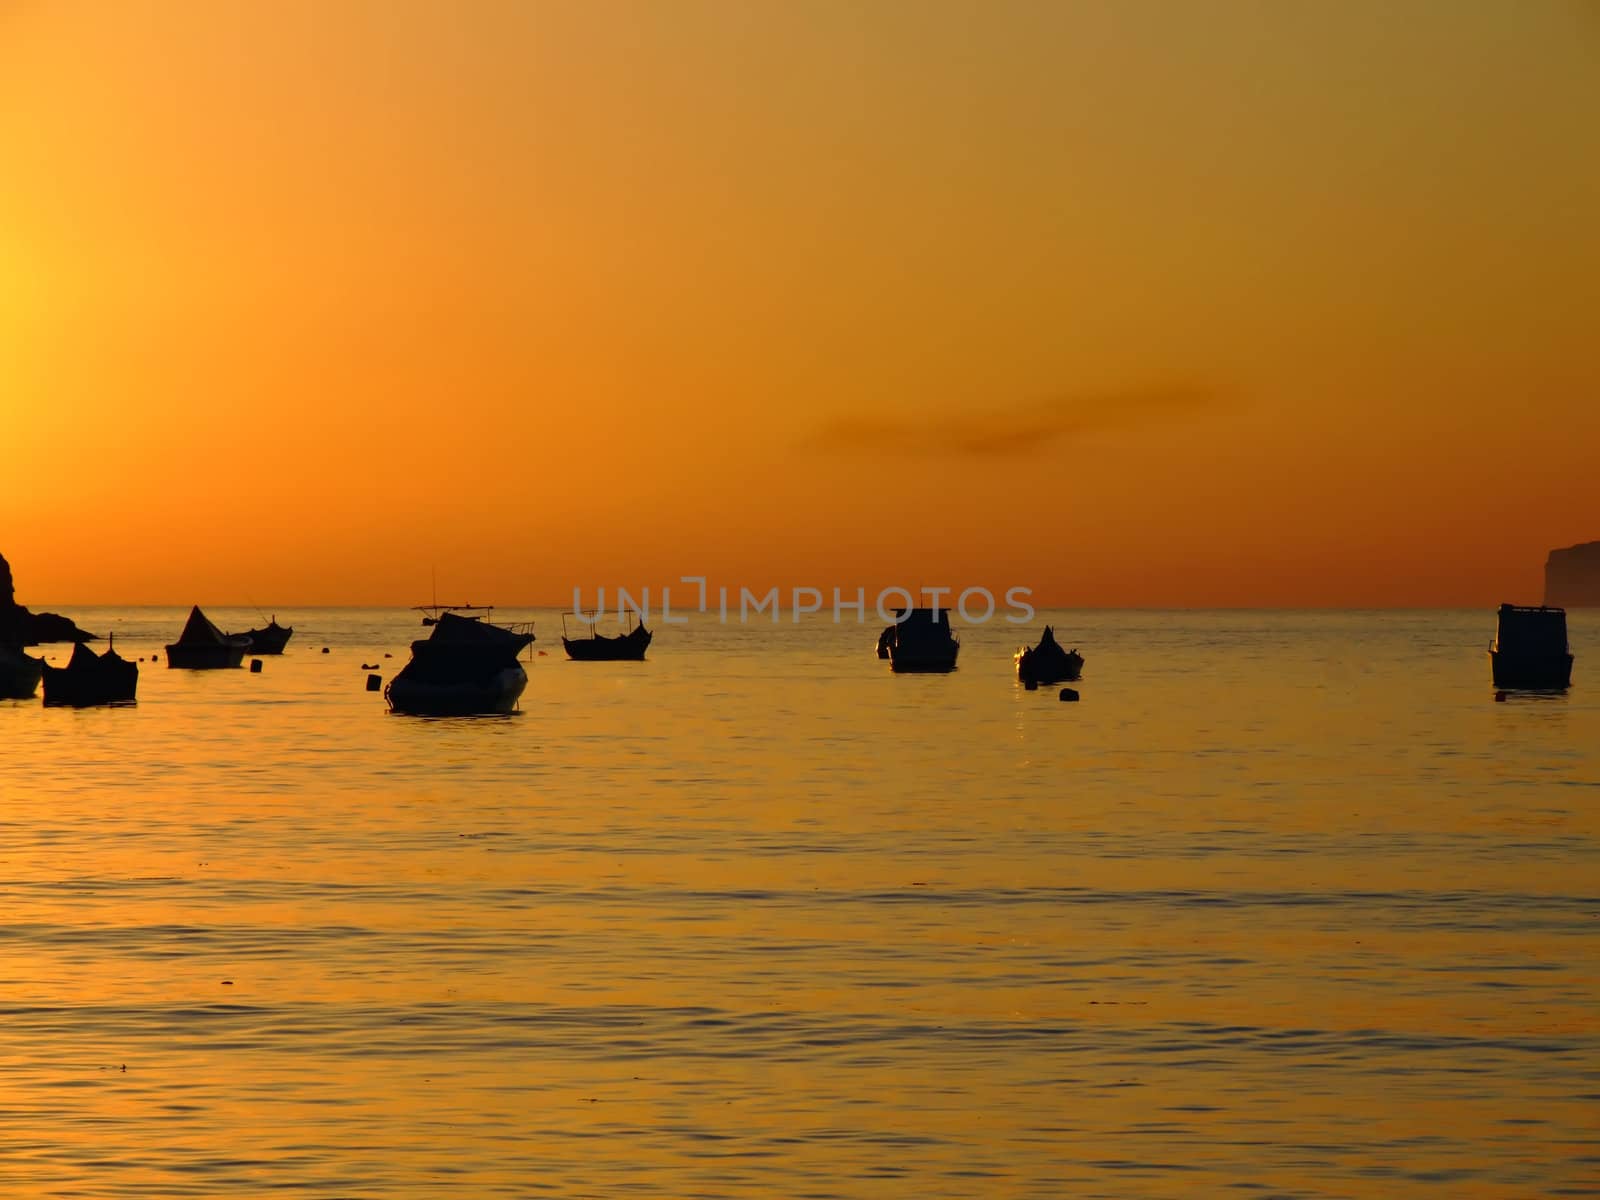 Typical Mediterranean sunset in a tranquil beach in Malta.